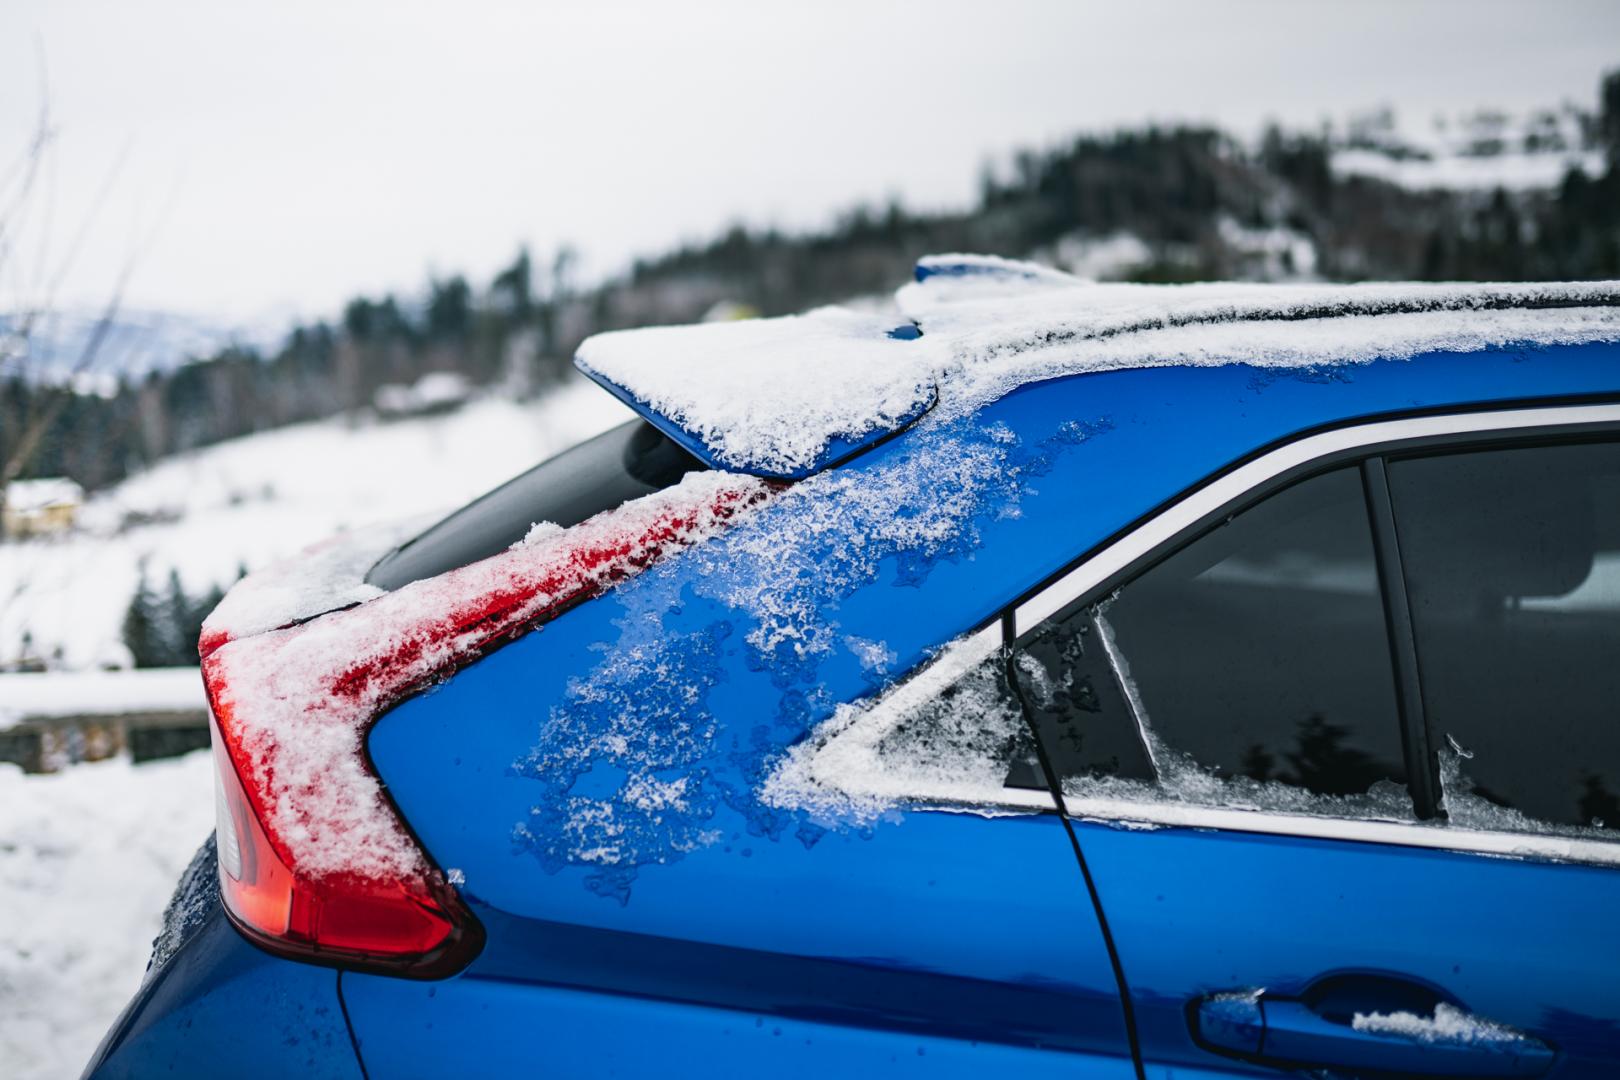 Mitsubishi Eclipse Cross śniegu się nie boi • AutoCentrum.pl